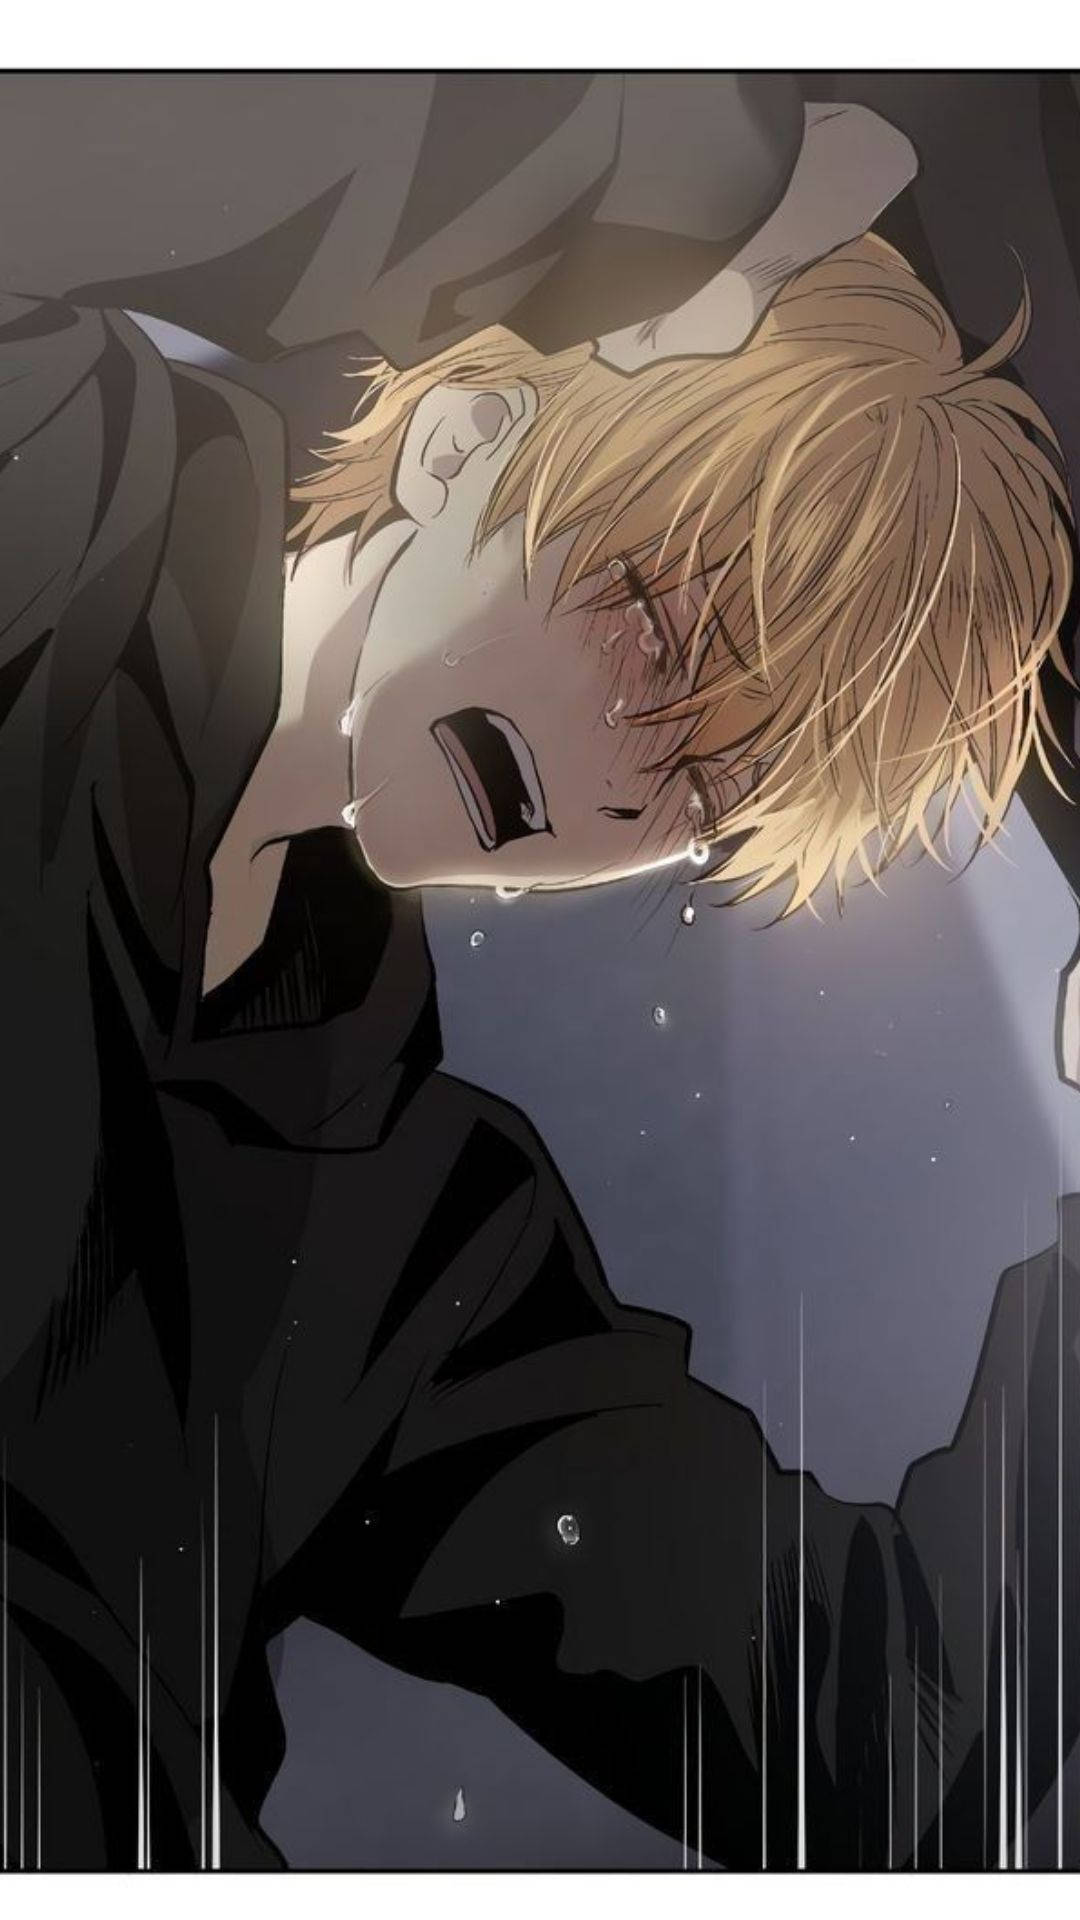 Animation Anime Boy Crying On Wall Background